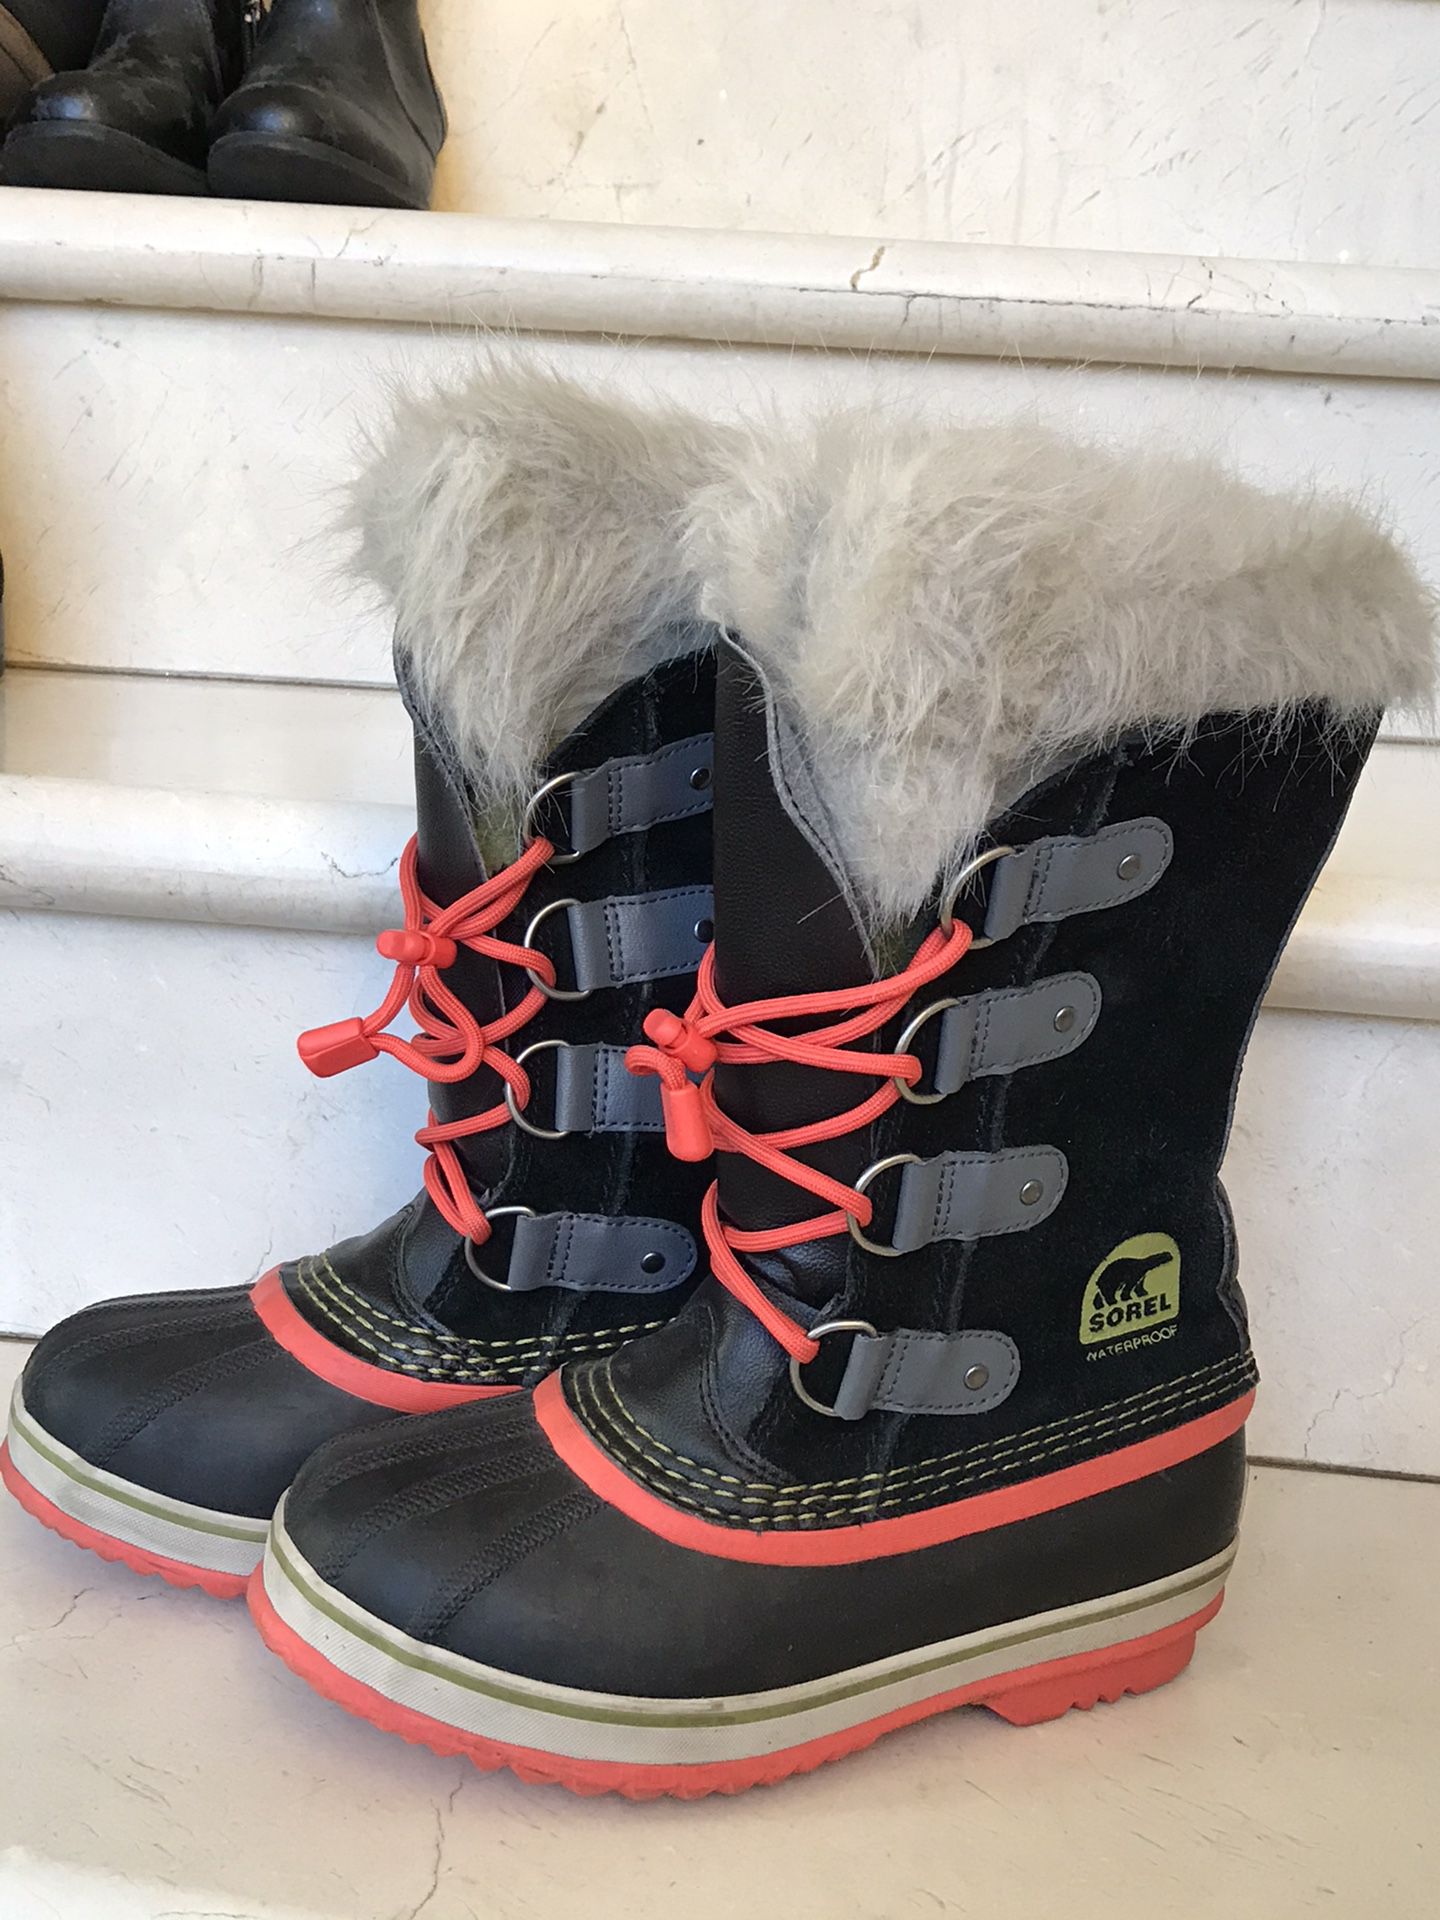 Snow Boots Sorel